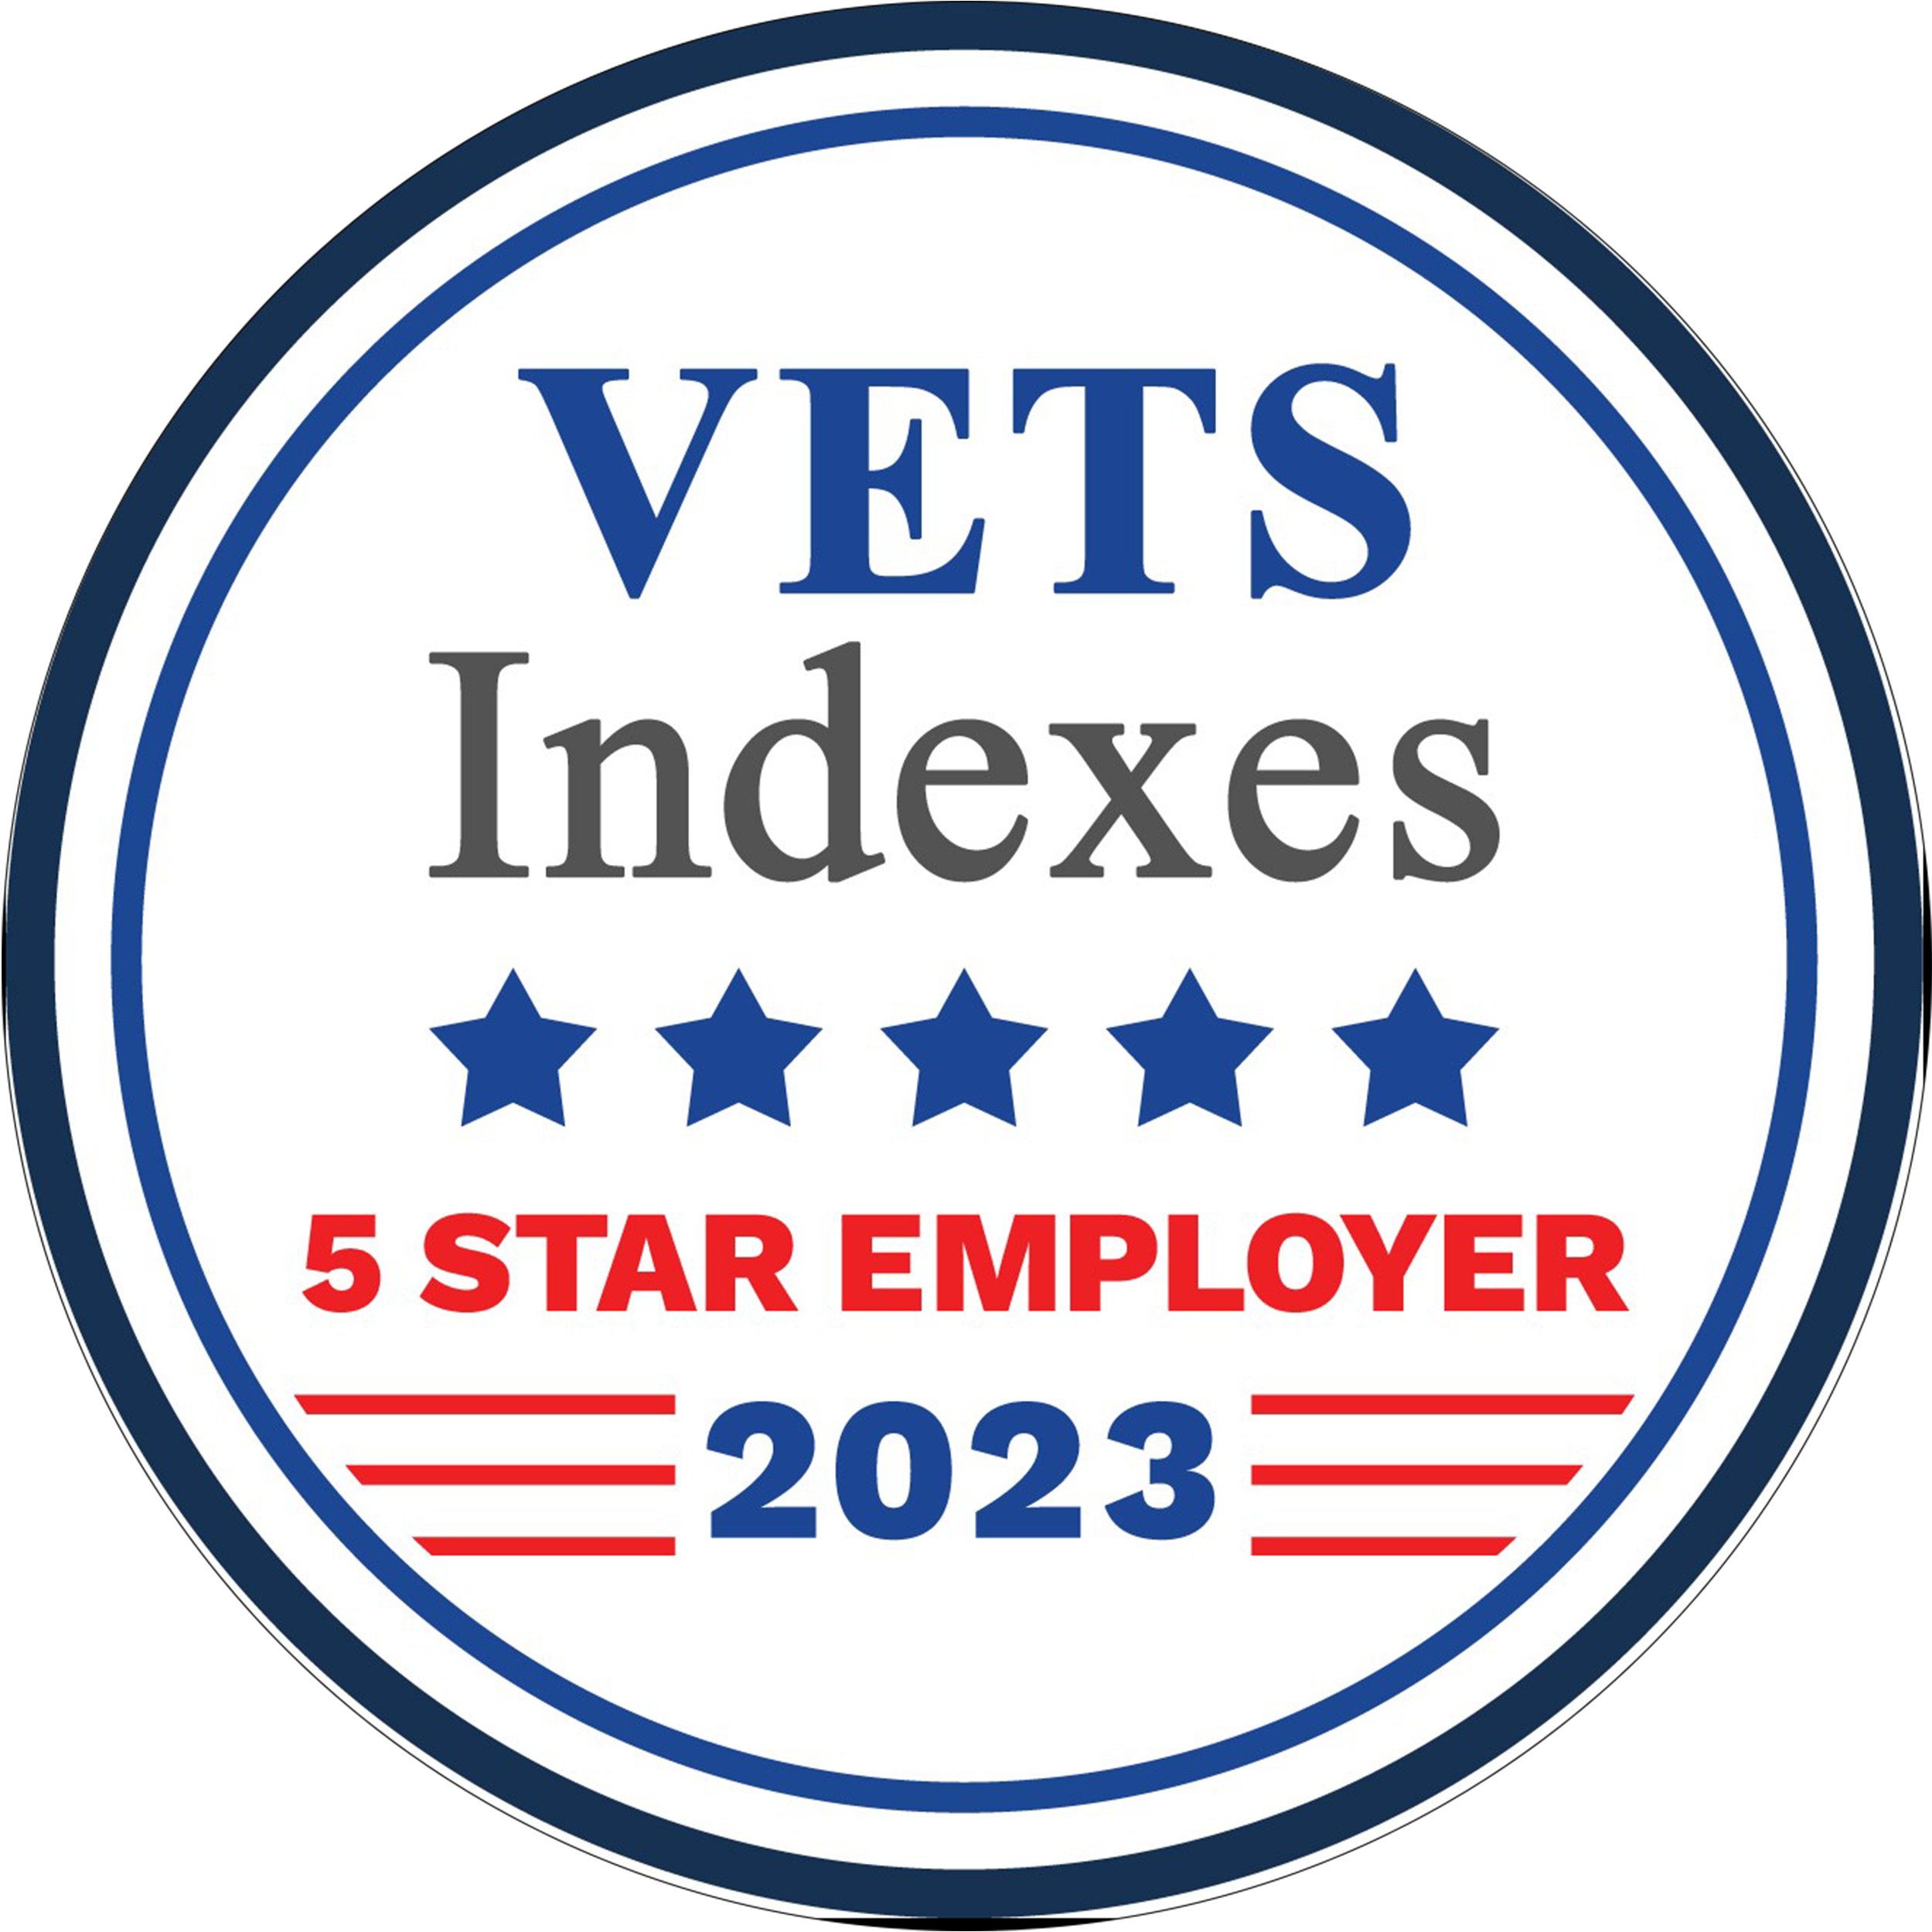 2023 Vets Index 5 Star